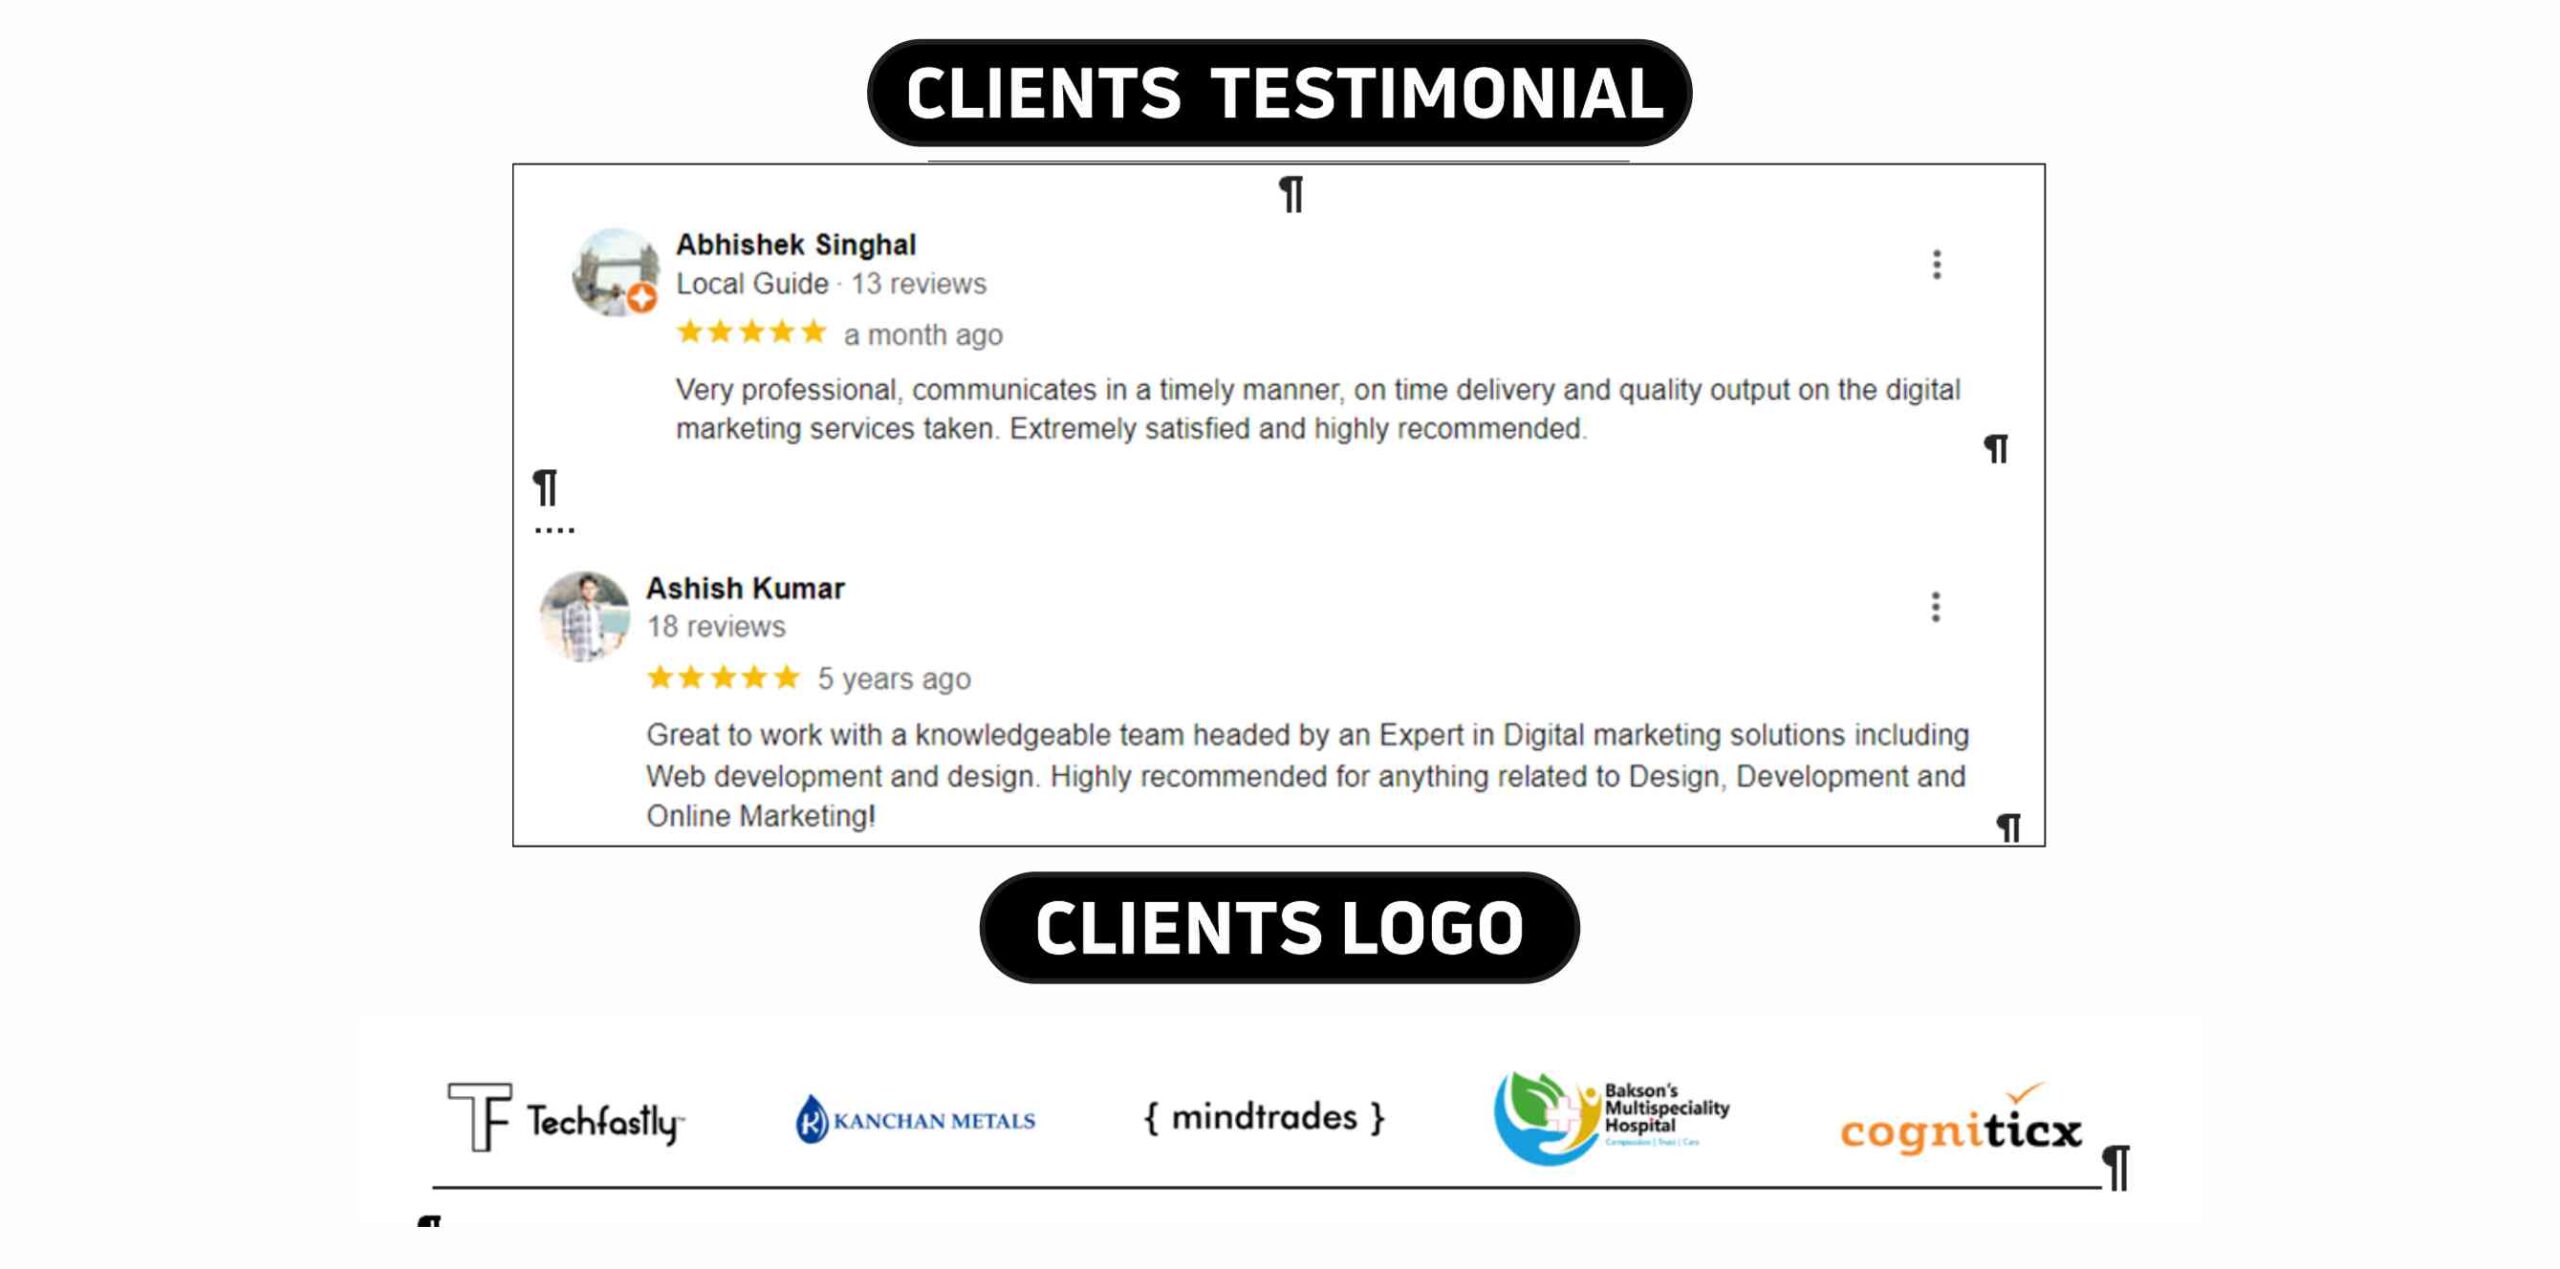 Digital Flic Client testimonial & Logos 